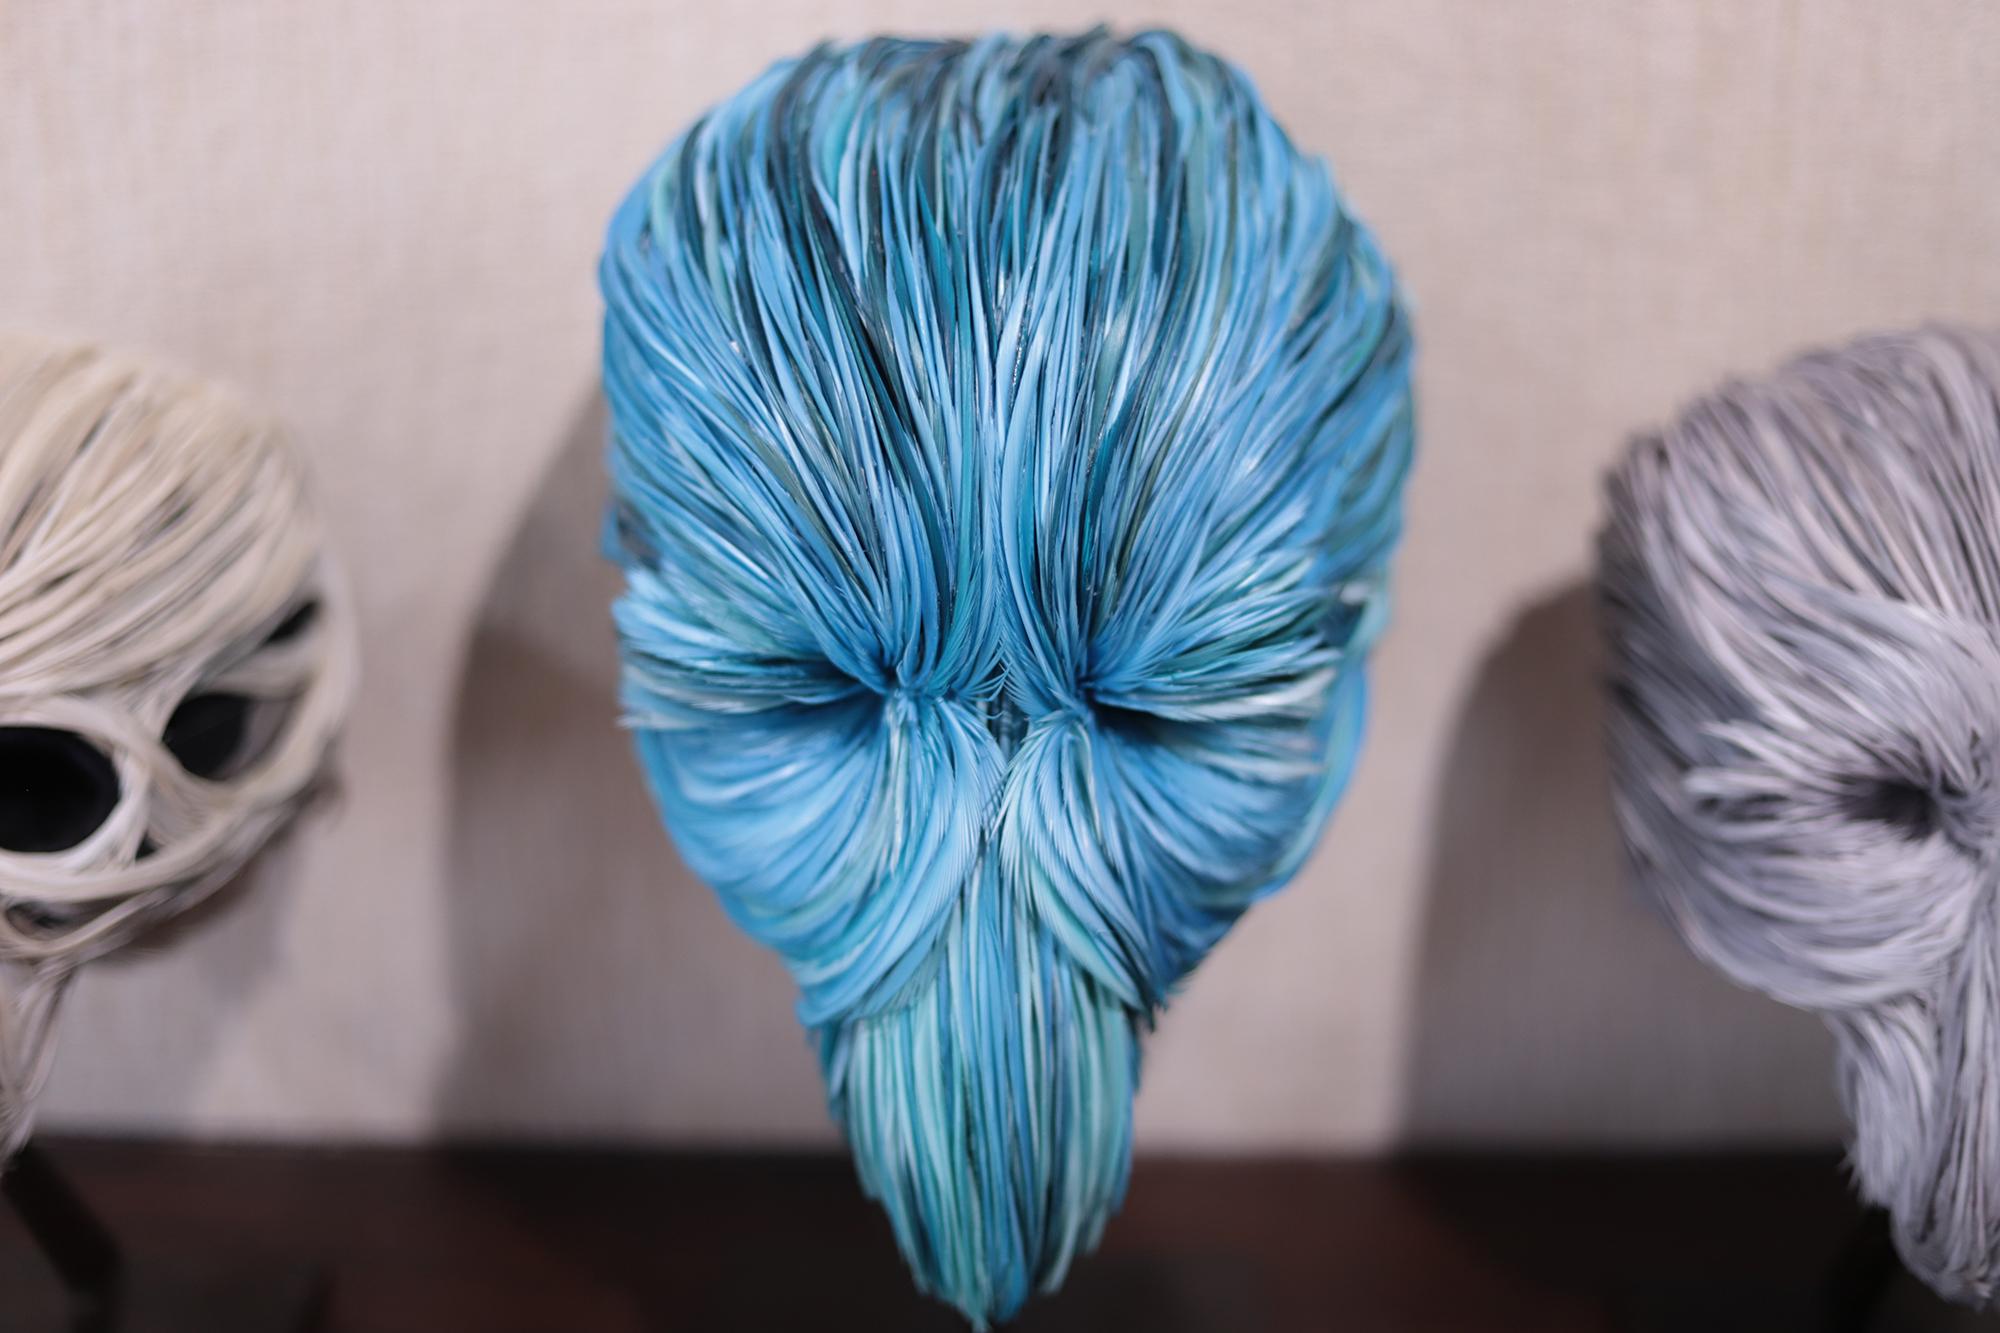 Esther blue feathers sculpture skull vanité on resin sculpture by L. Le Constant 6